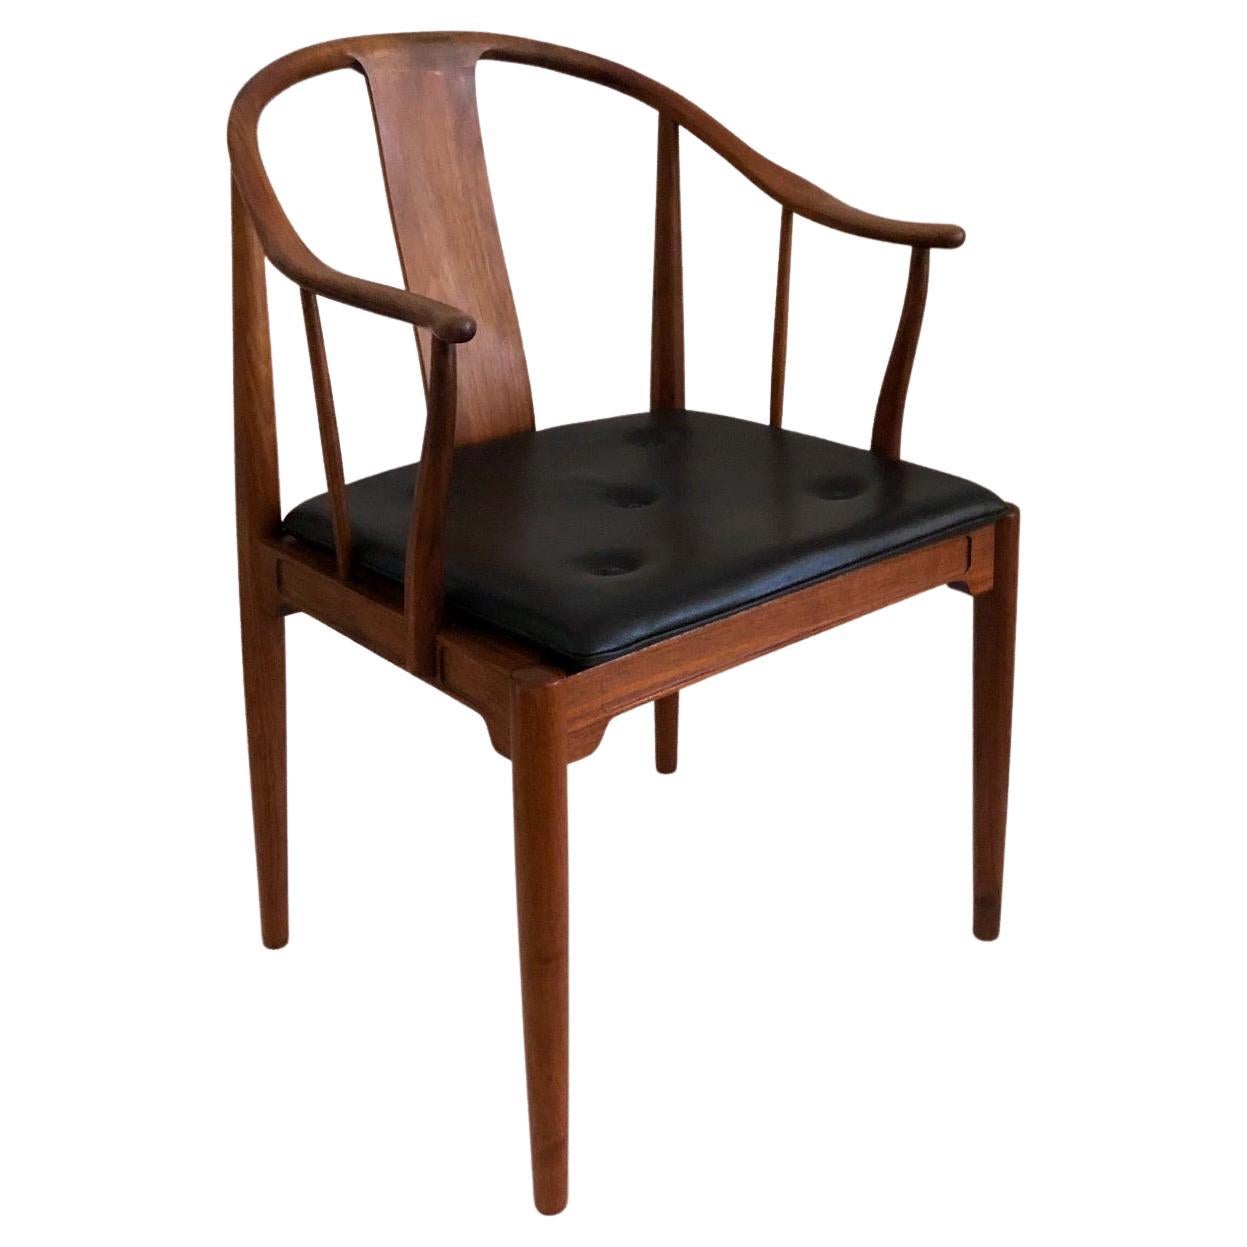 Hans J. Wegner, a 1977 Limited Edition Walnut Armchair “China Chair”